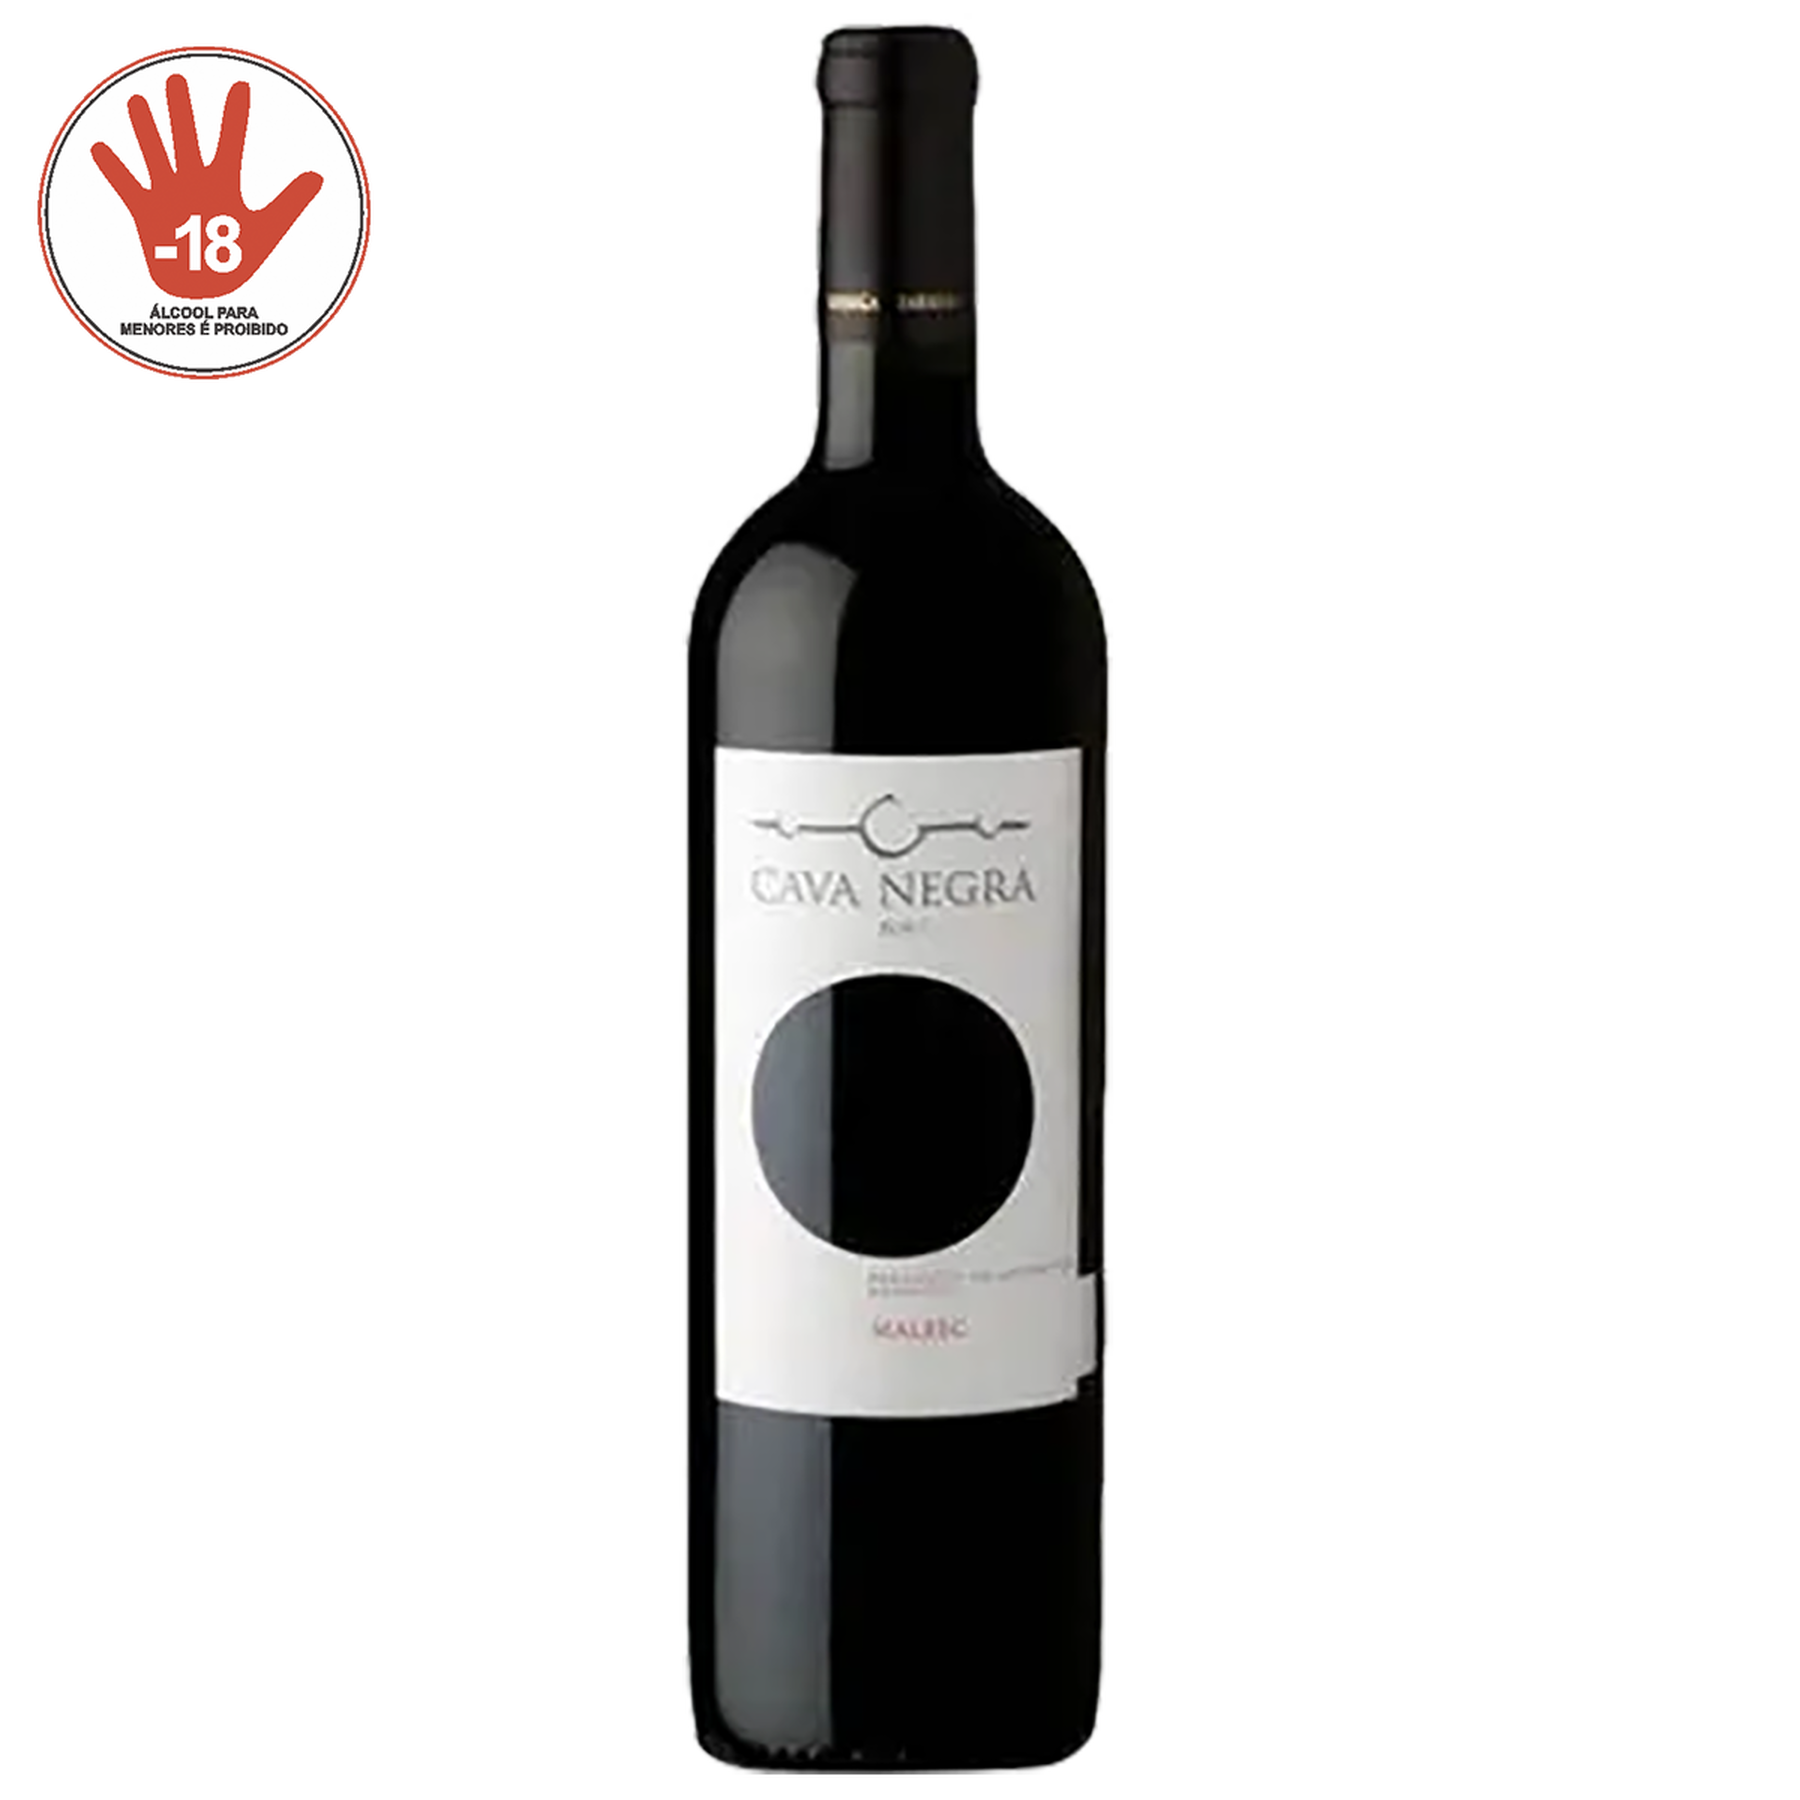 Vinho Cava Negra Tinto Malbec 750ml